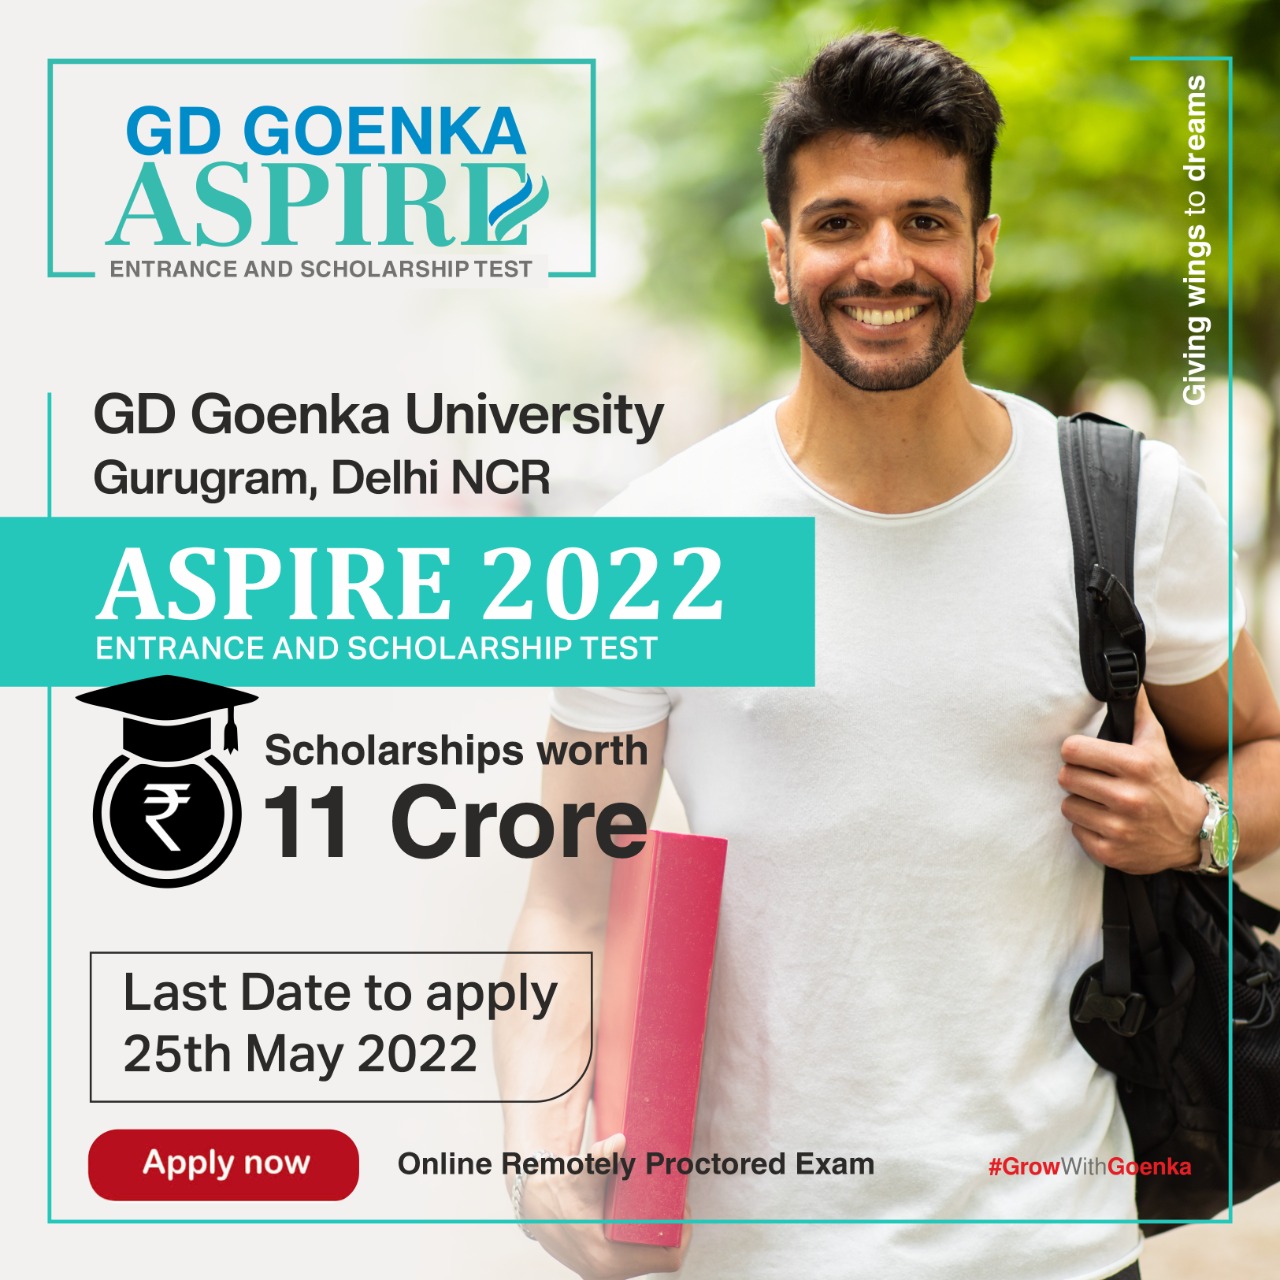 GD Goenka Aspire Entrance and Scholarship Test 2022